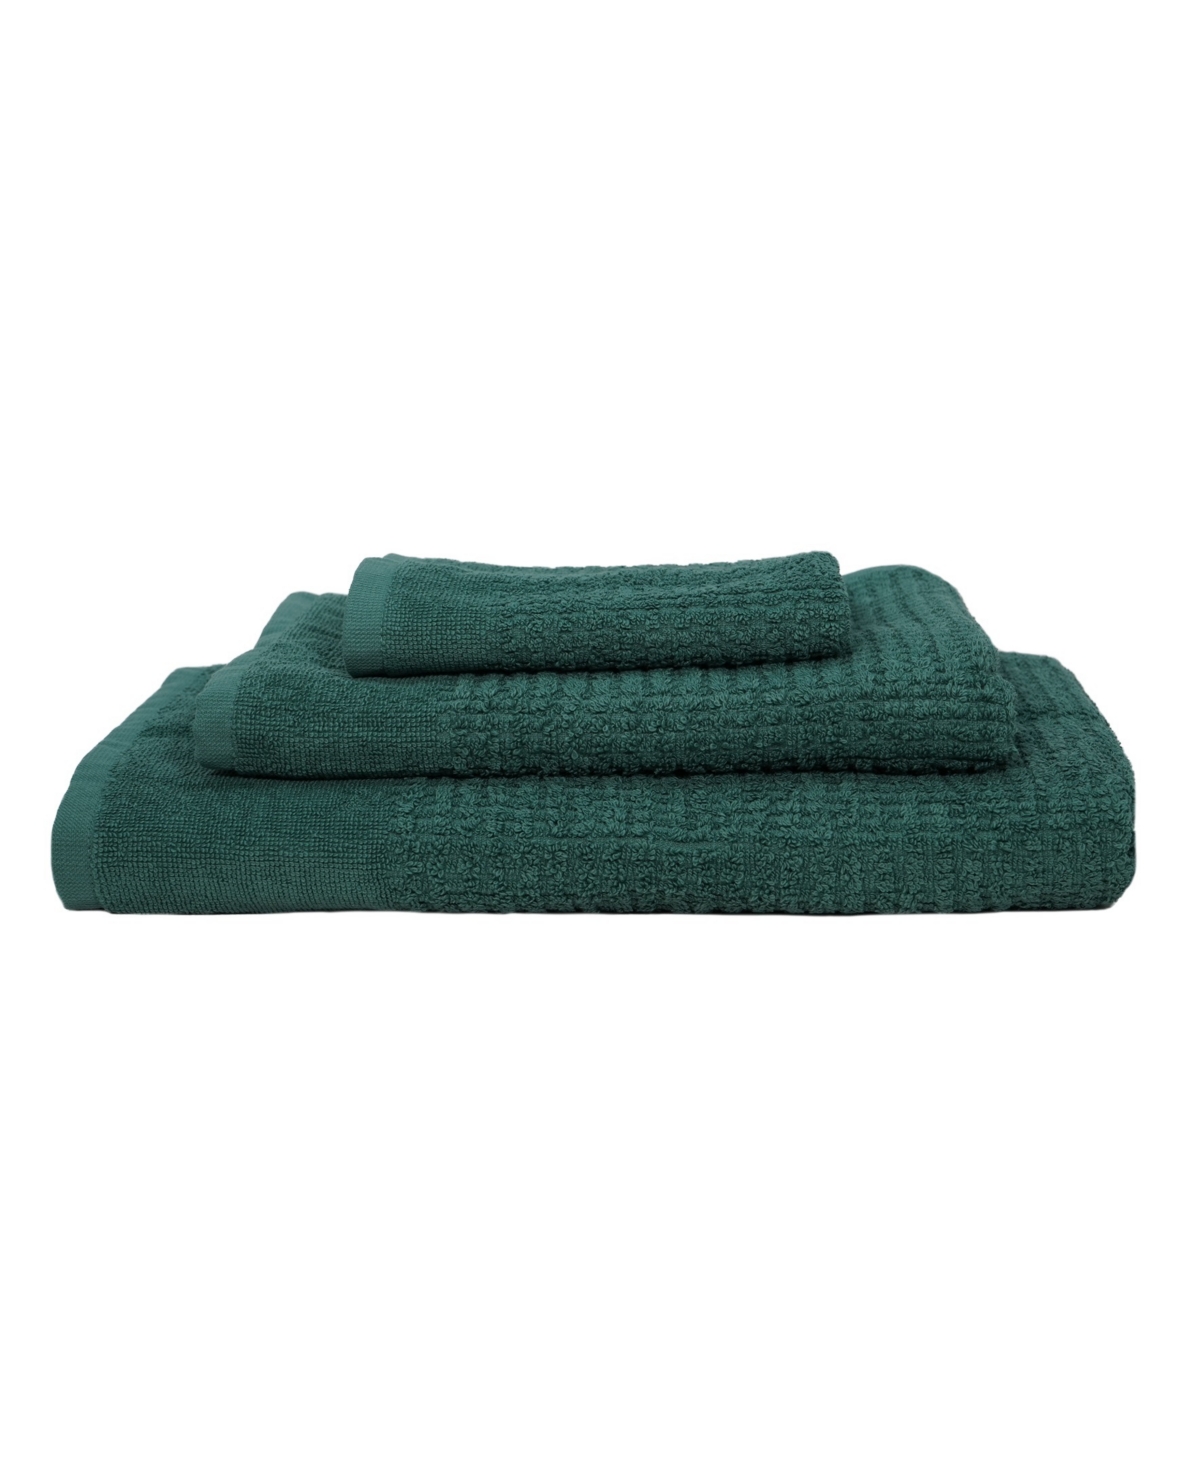 Ozan Premium Home Sorano Collection 3 Piece Turkish Cotton Luxury Towel Set Bedding In Green